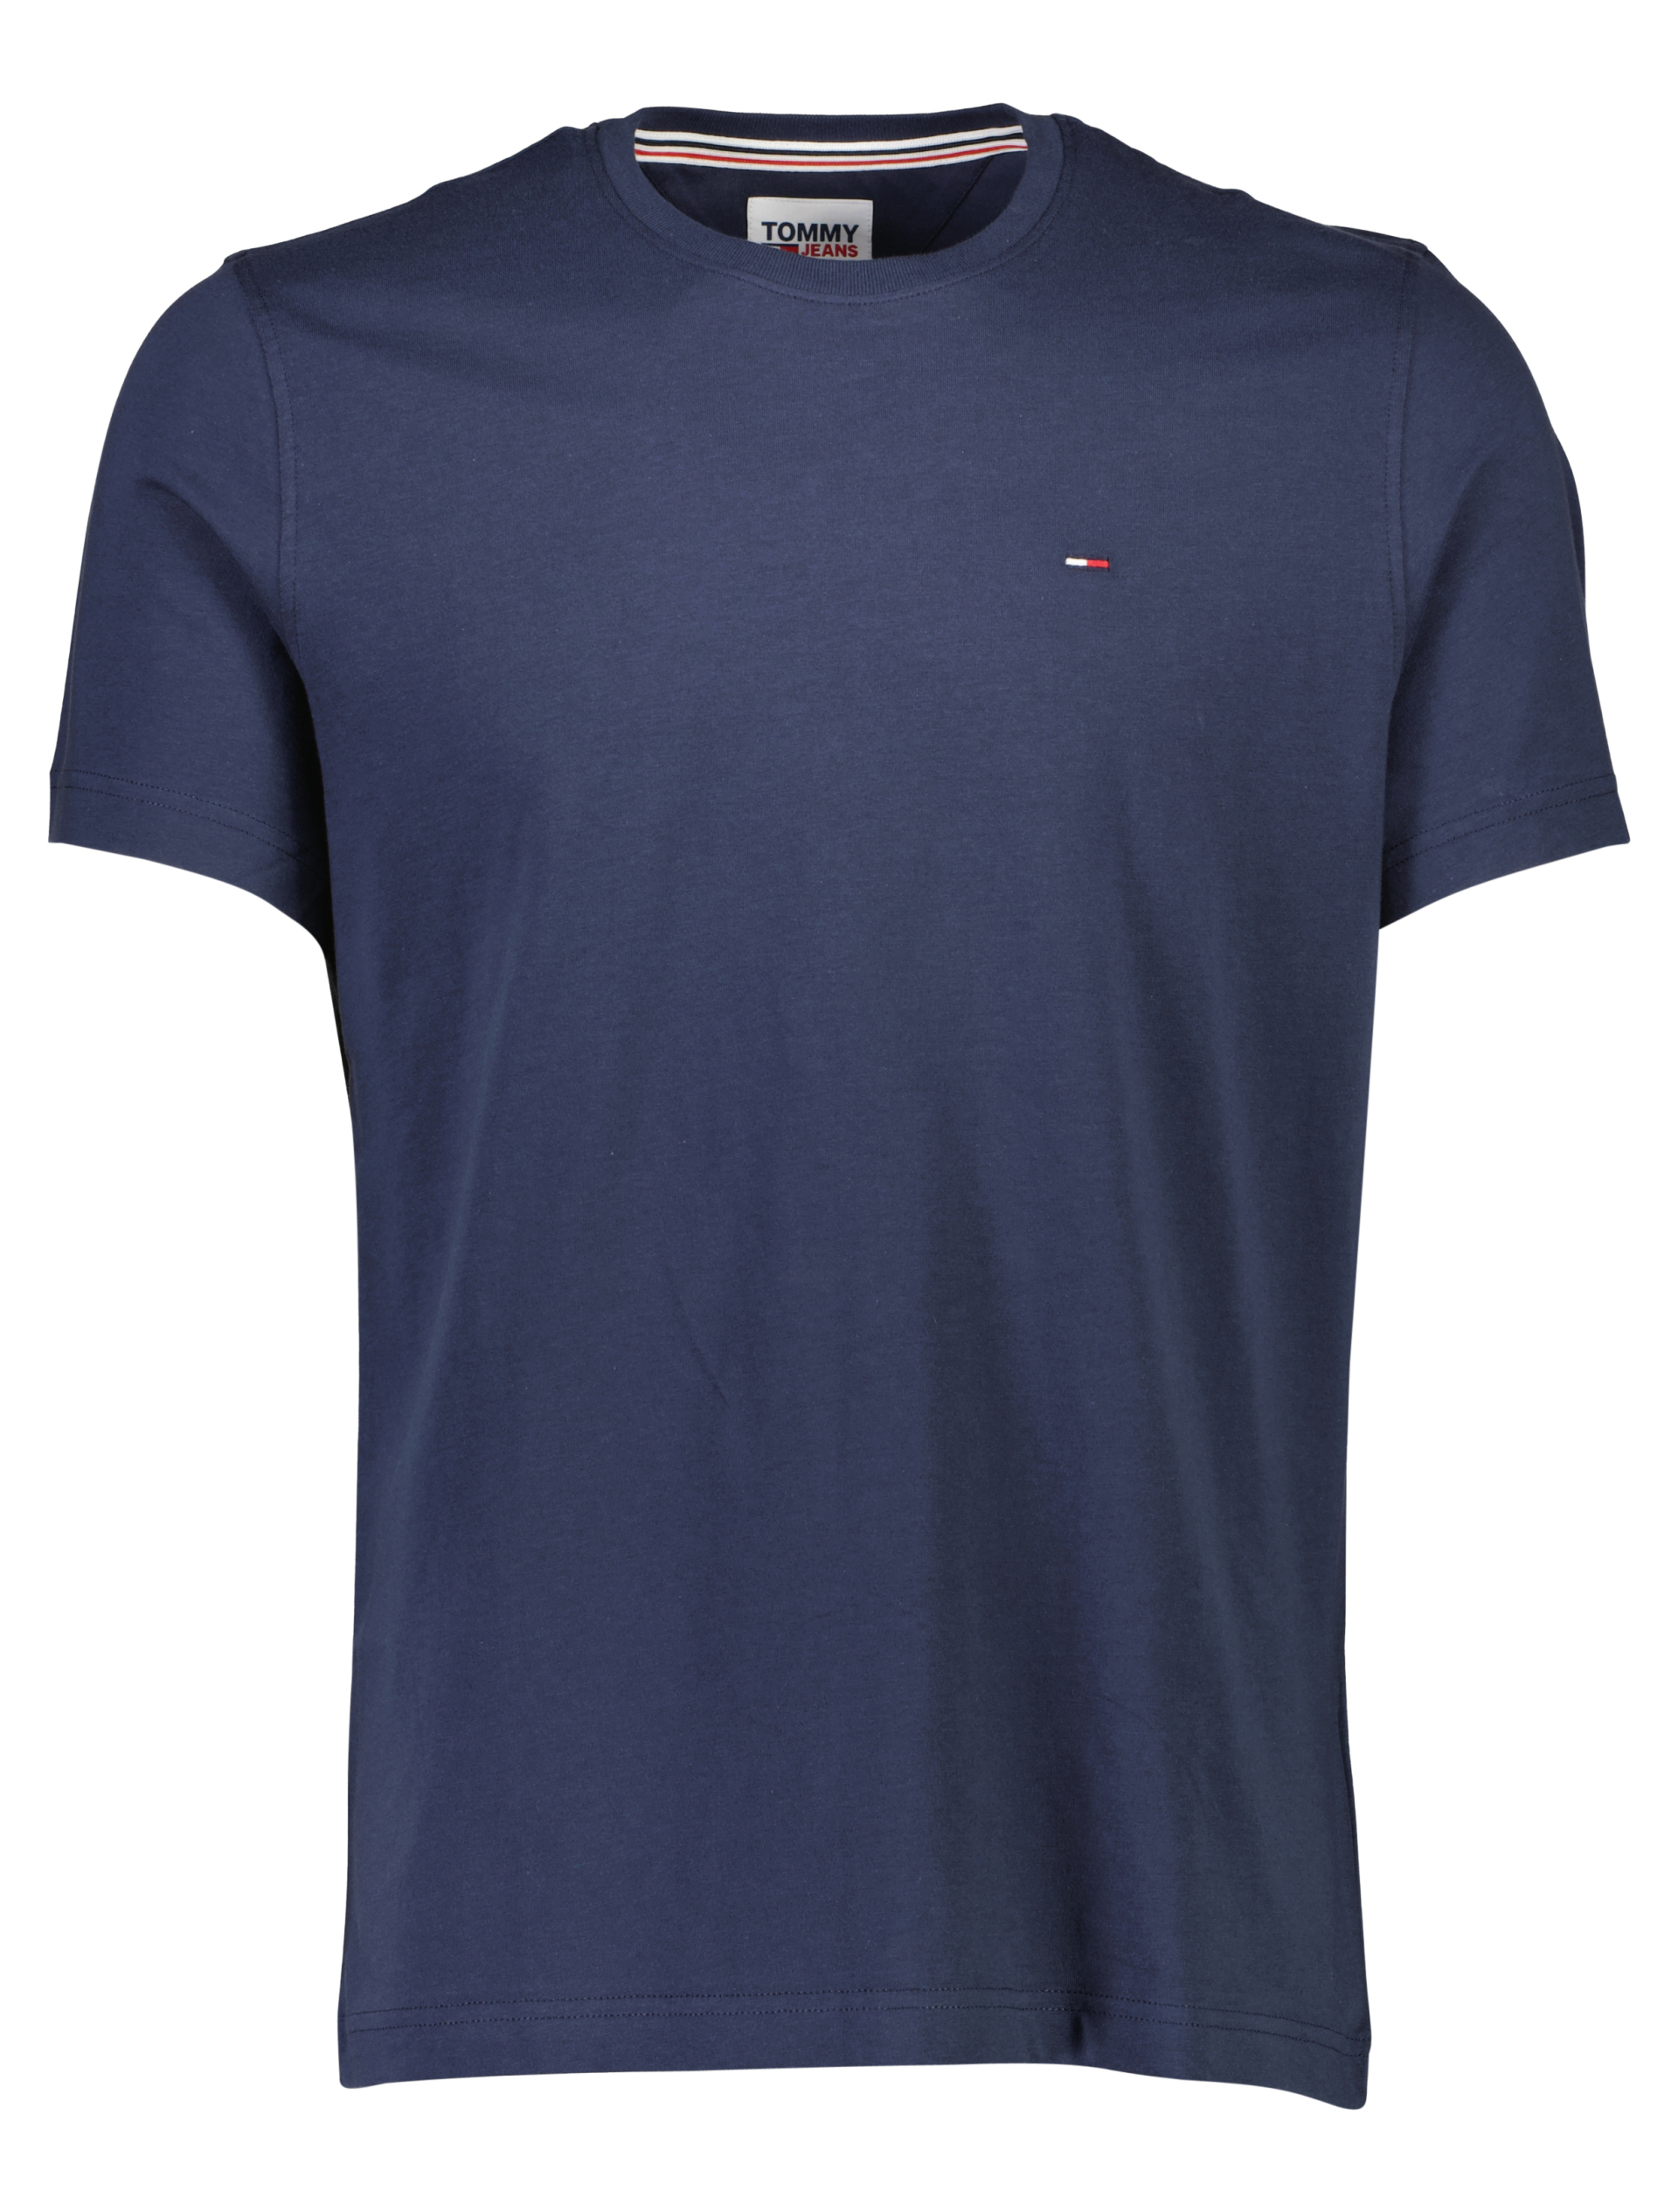 Tommy Jeans T-shirt blå / 002 navy